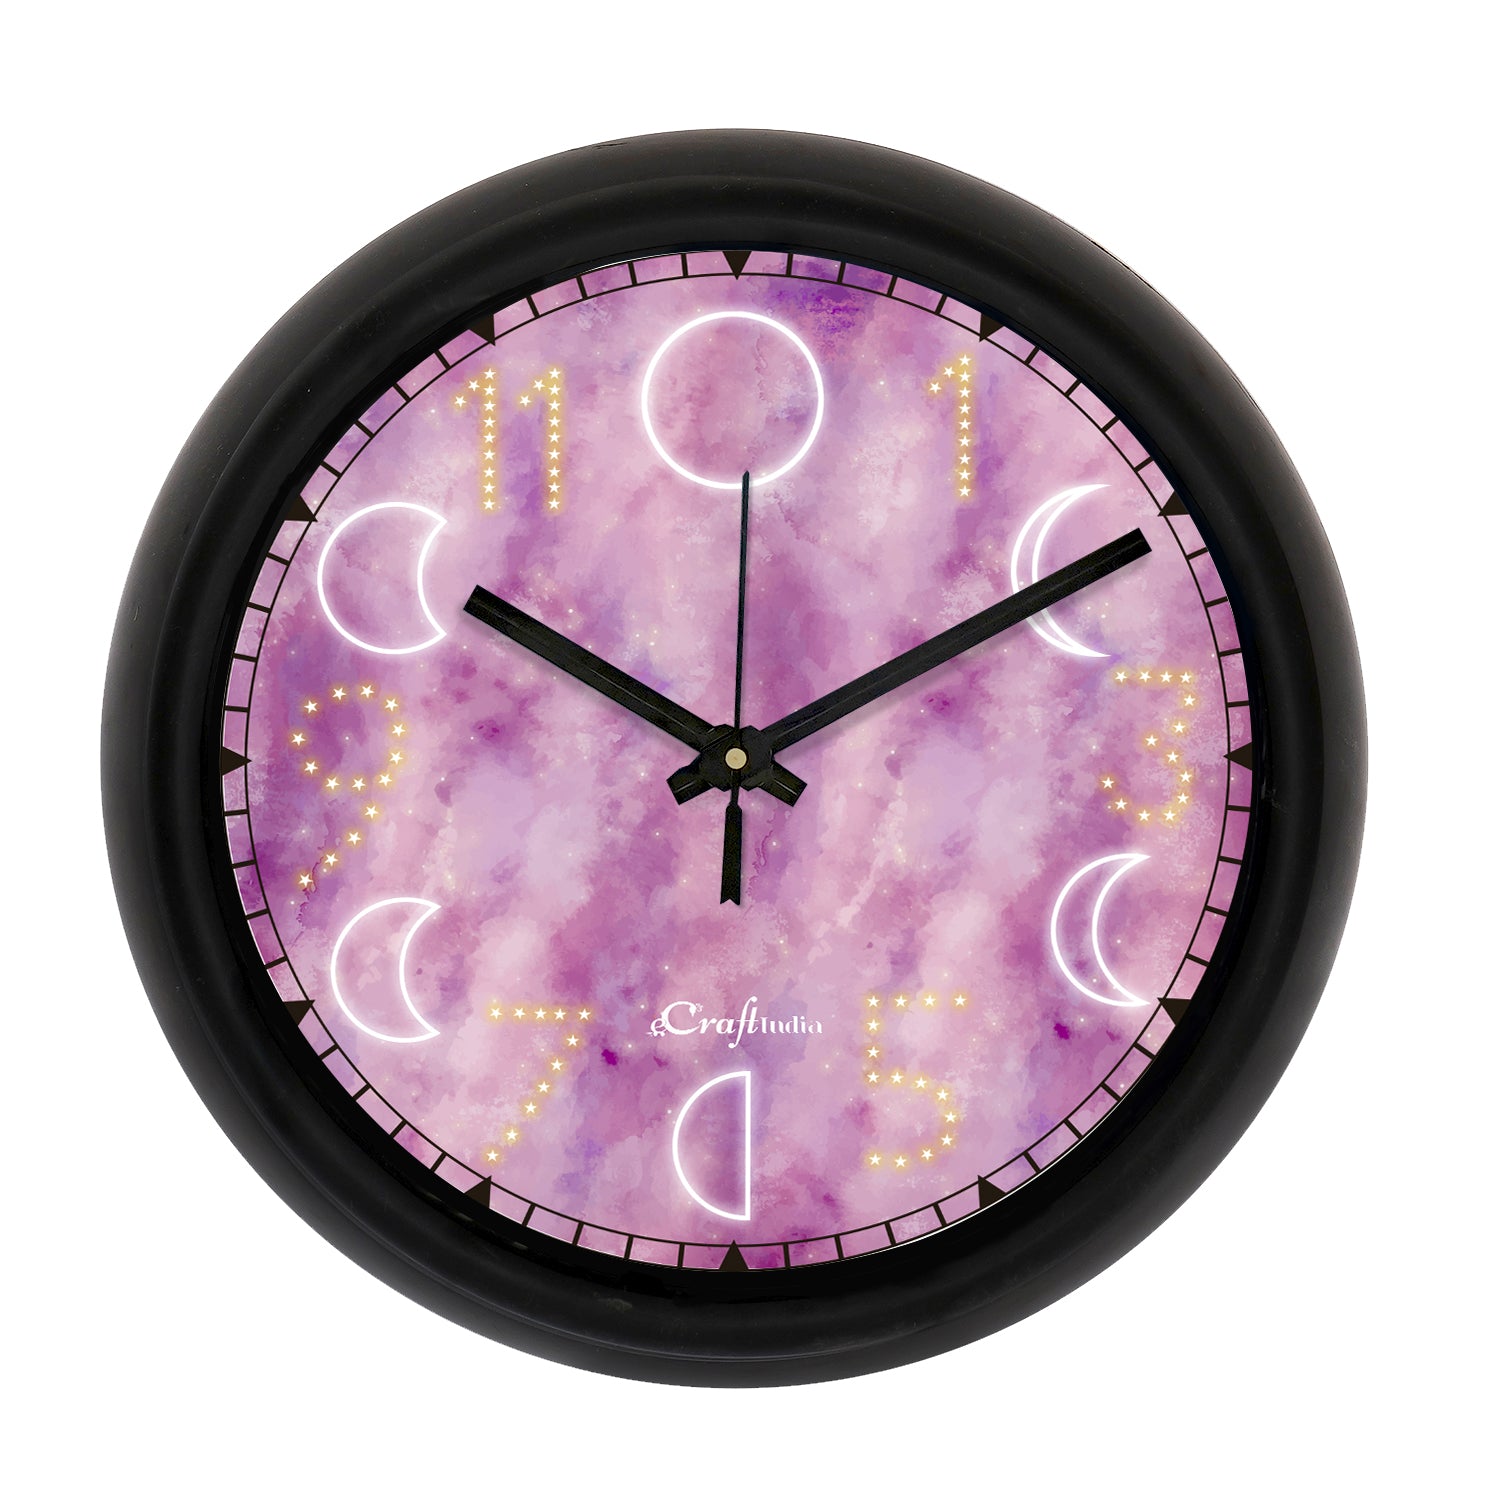 "Number Constellation" Designer Round Analog Black Wall Clock